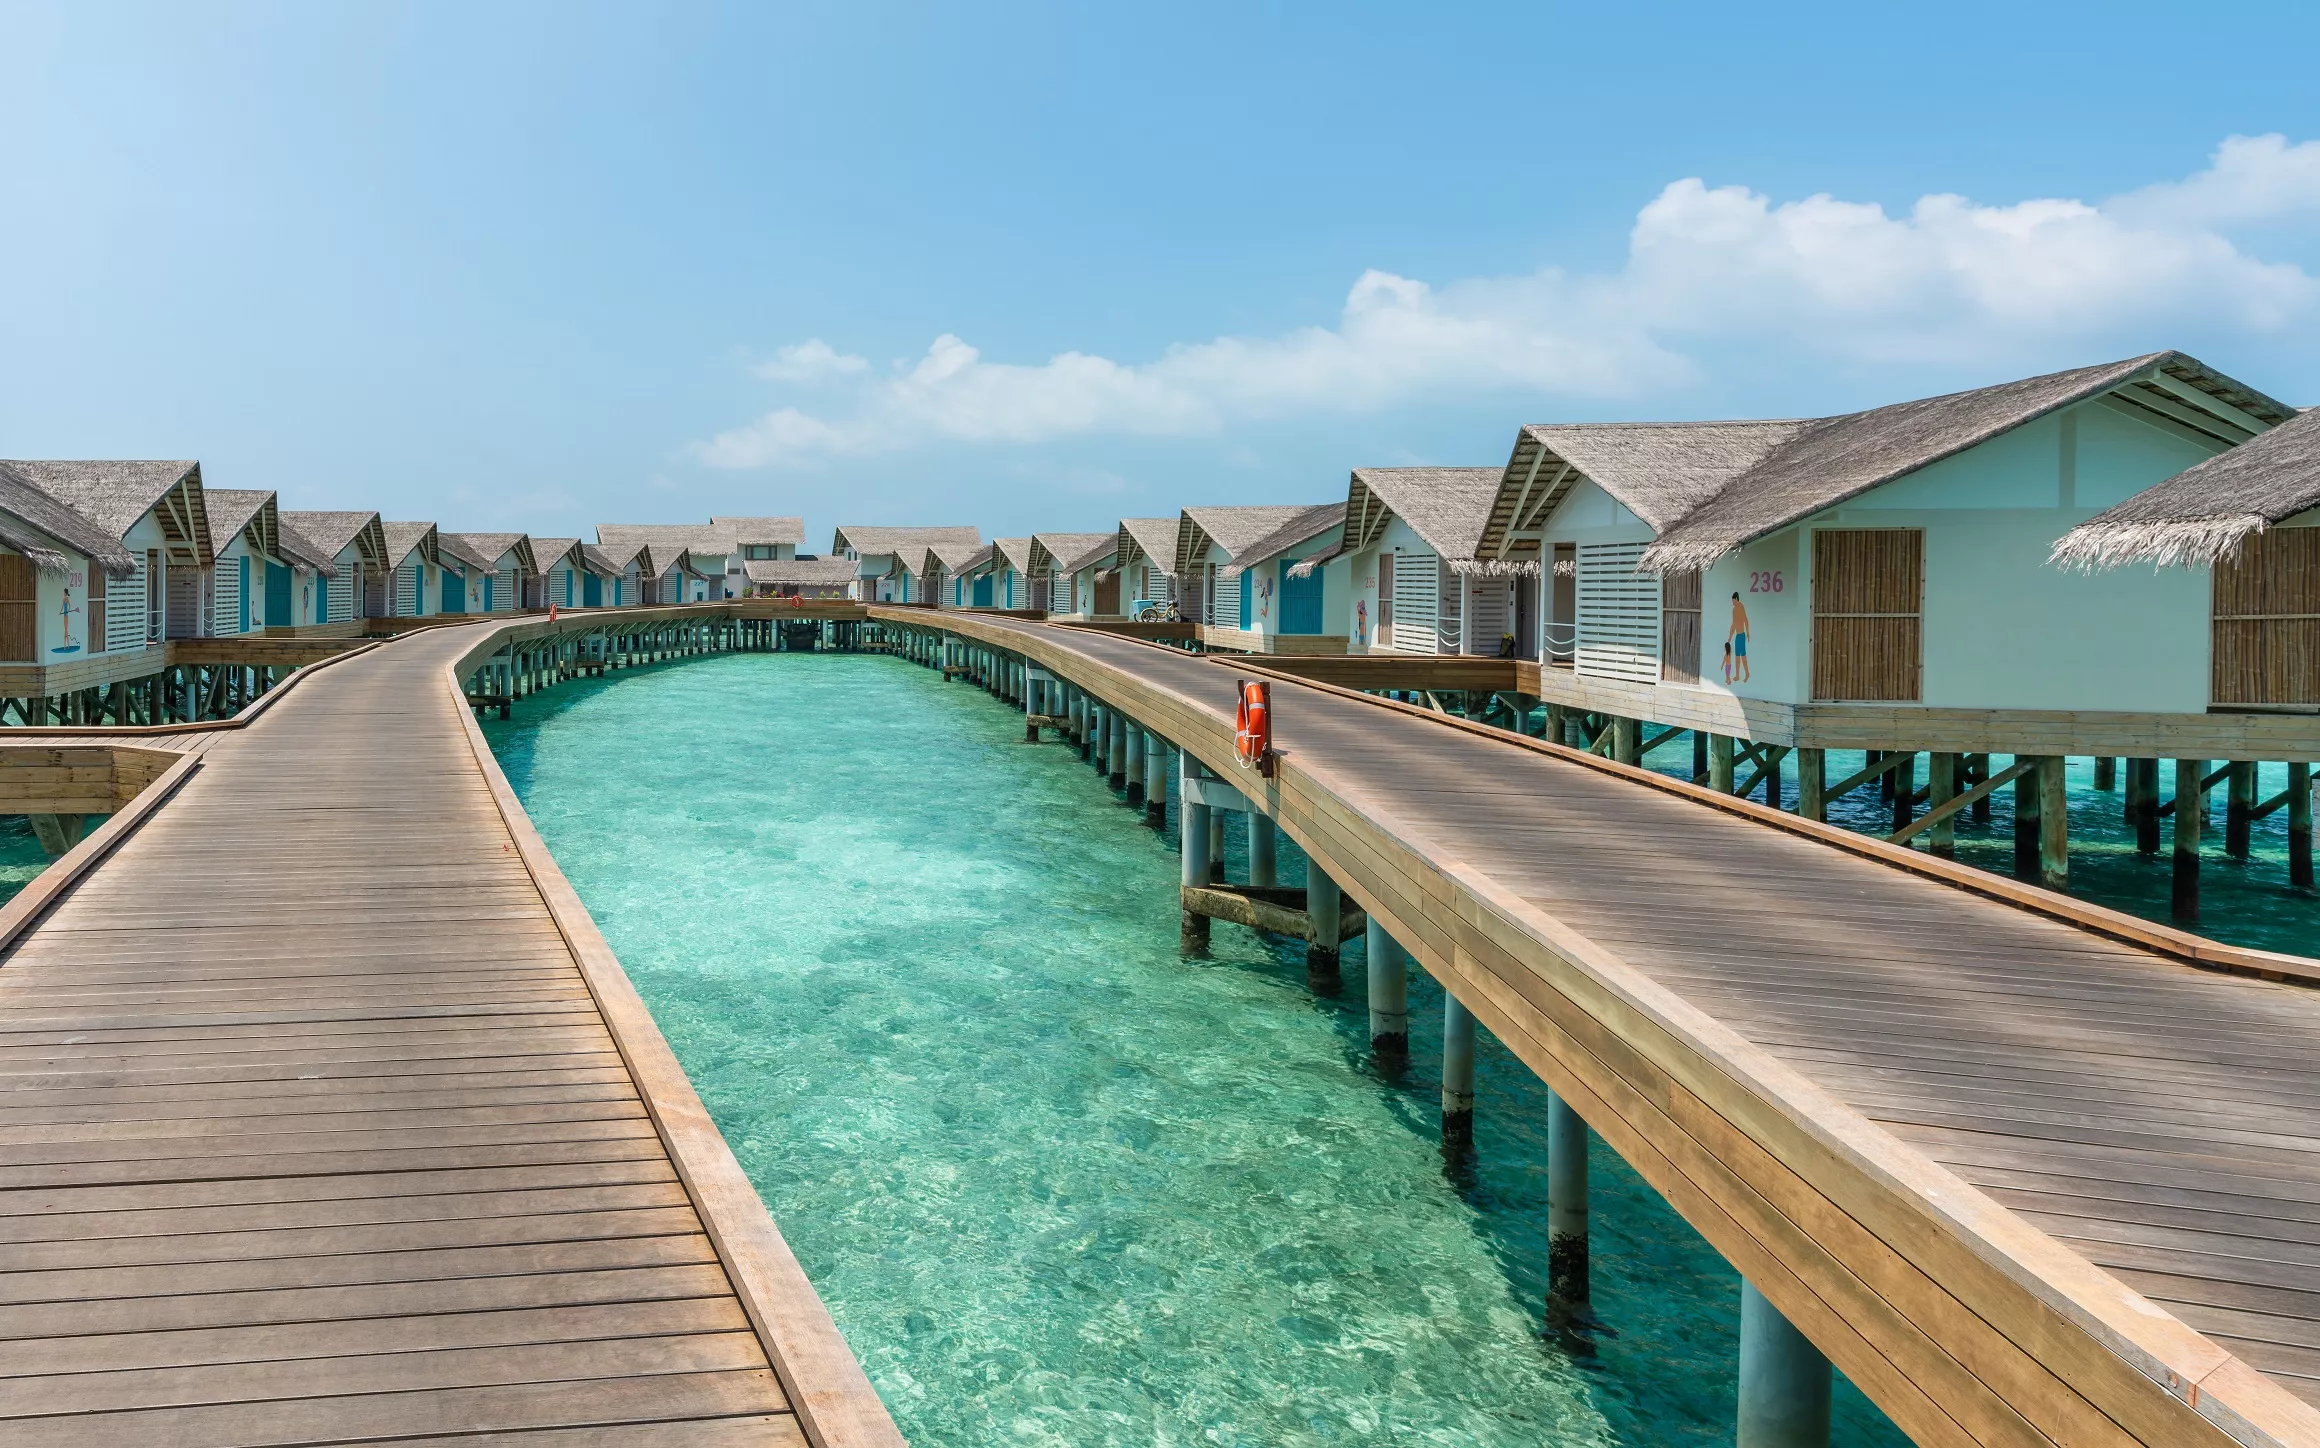 Cora Cora Maldives Resort 5*